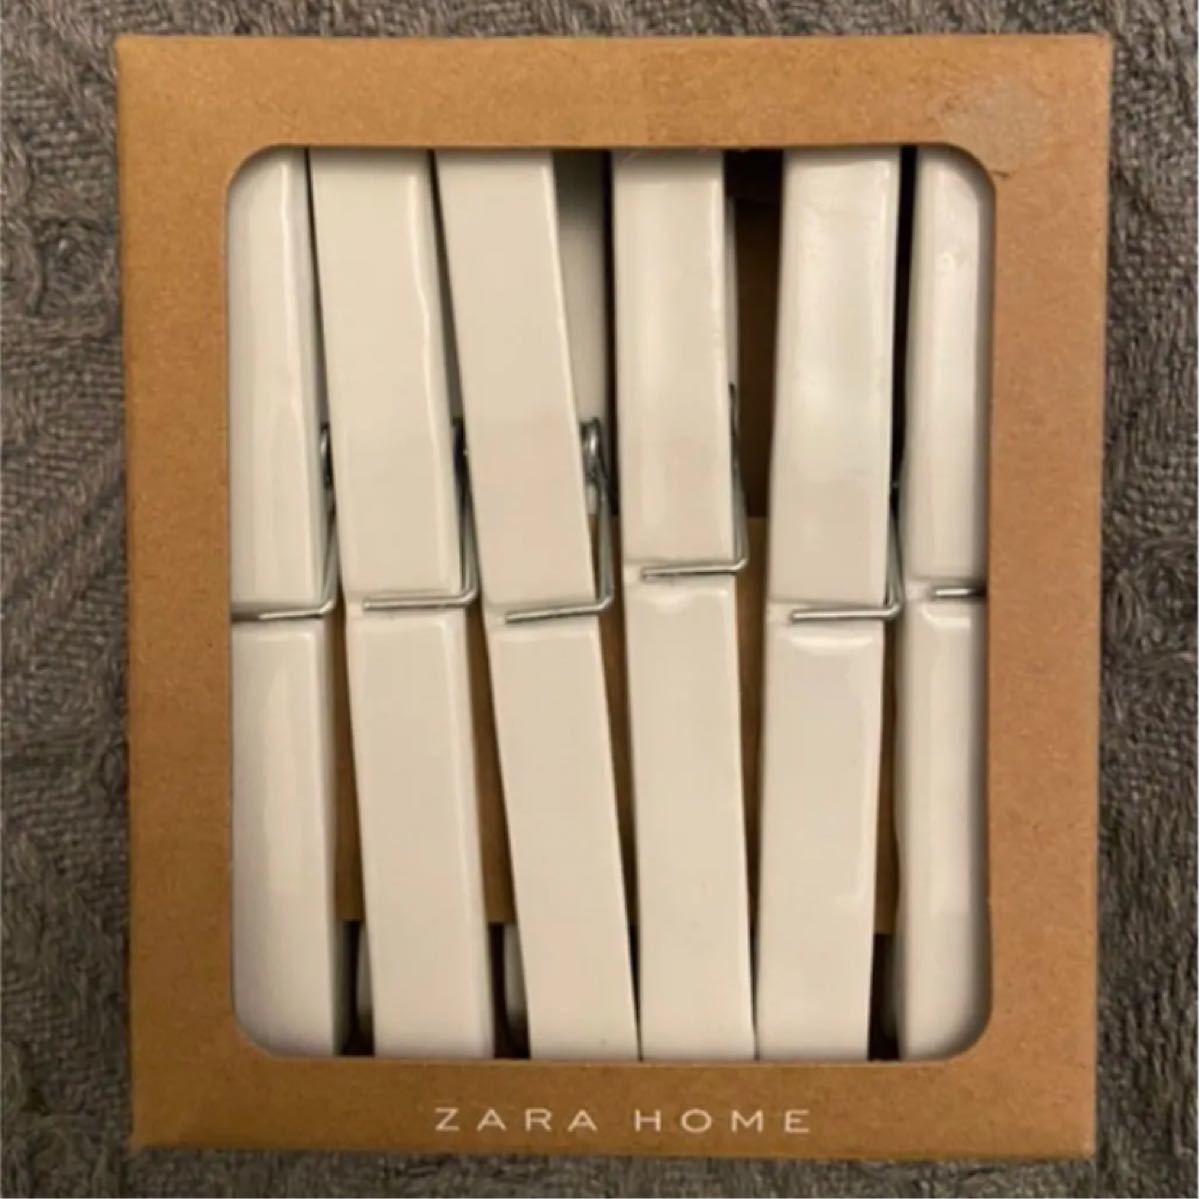 ZARA HOME ザラホーム洗濯バサミ型カトラリーレスト 6個セット定価1990円 未使用品